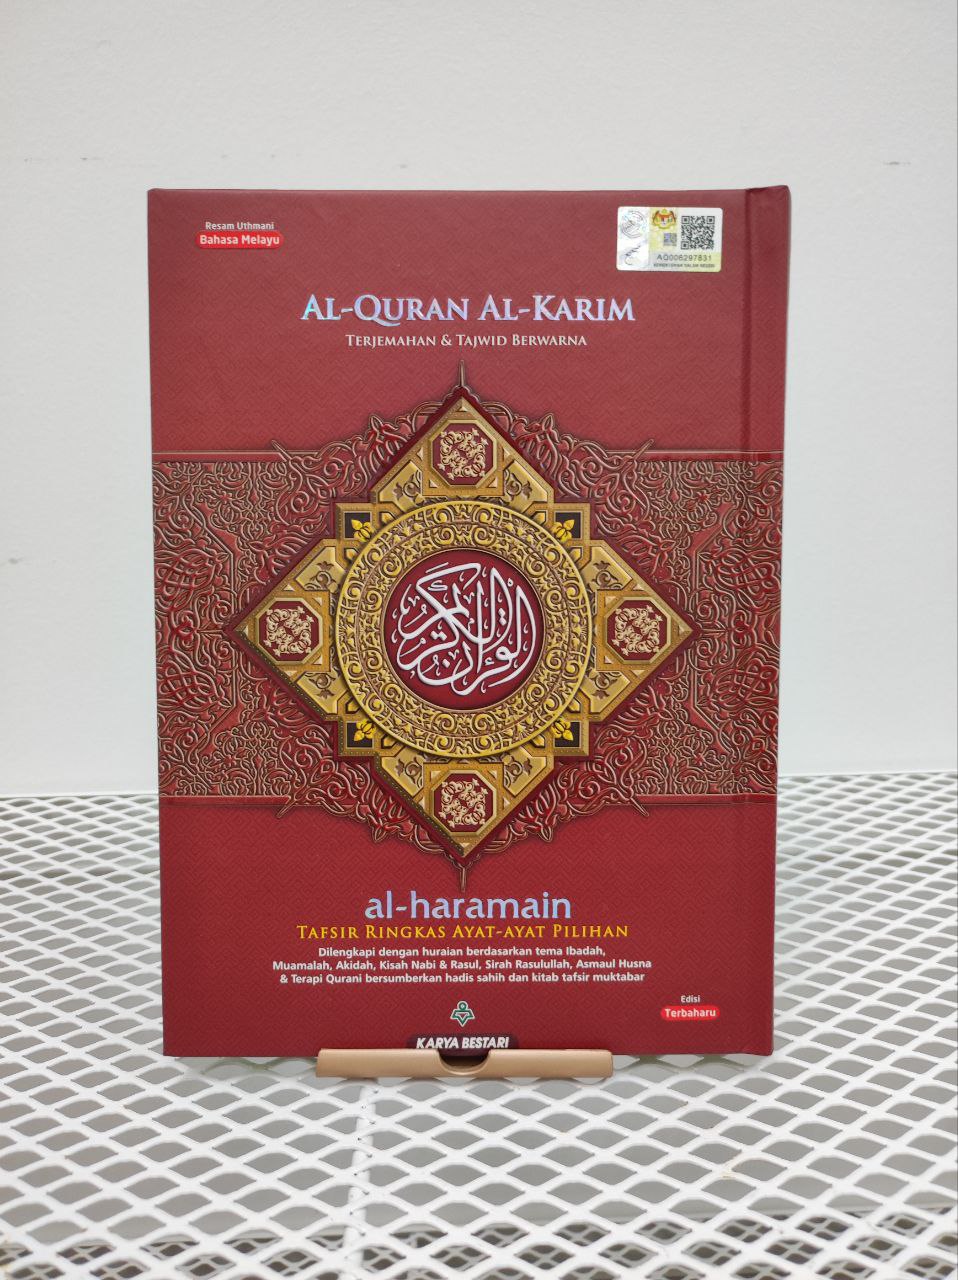 Al-Quran Al-Haramain